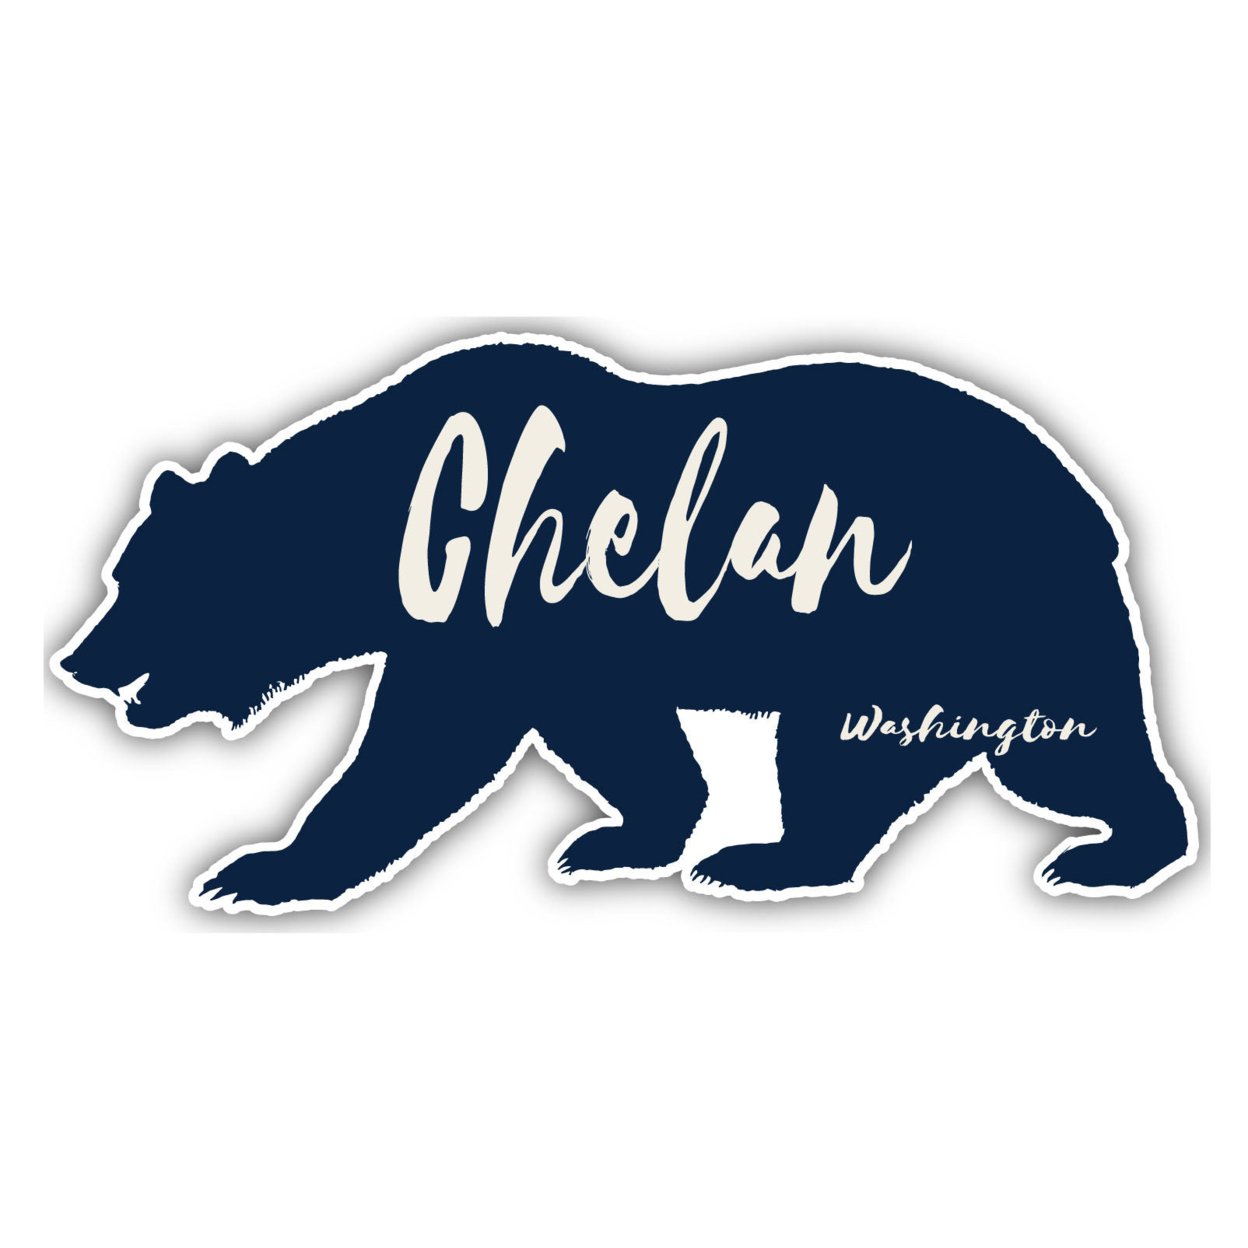 Chelan Washington Souvenir Decorative Stickers (Choose Theme And Size) - 4-Pack, 8-Inch, Tent